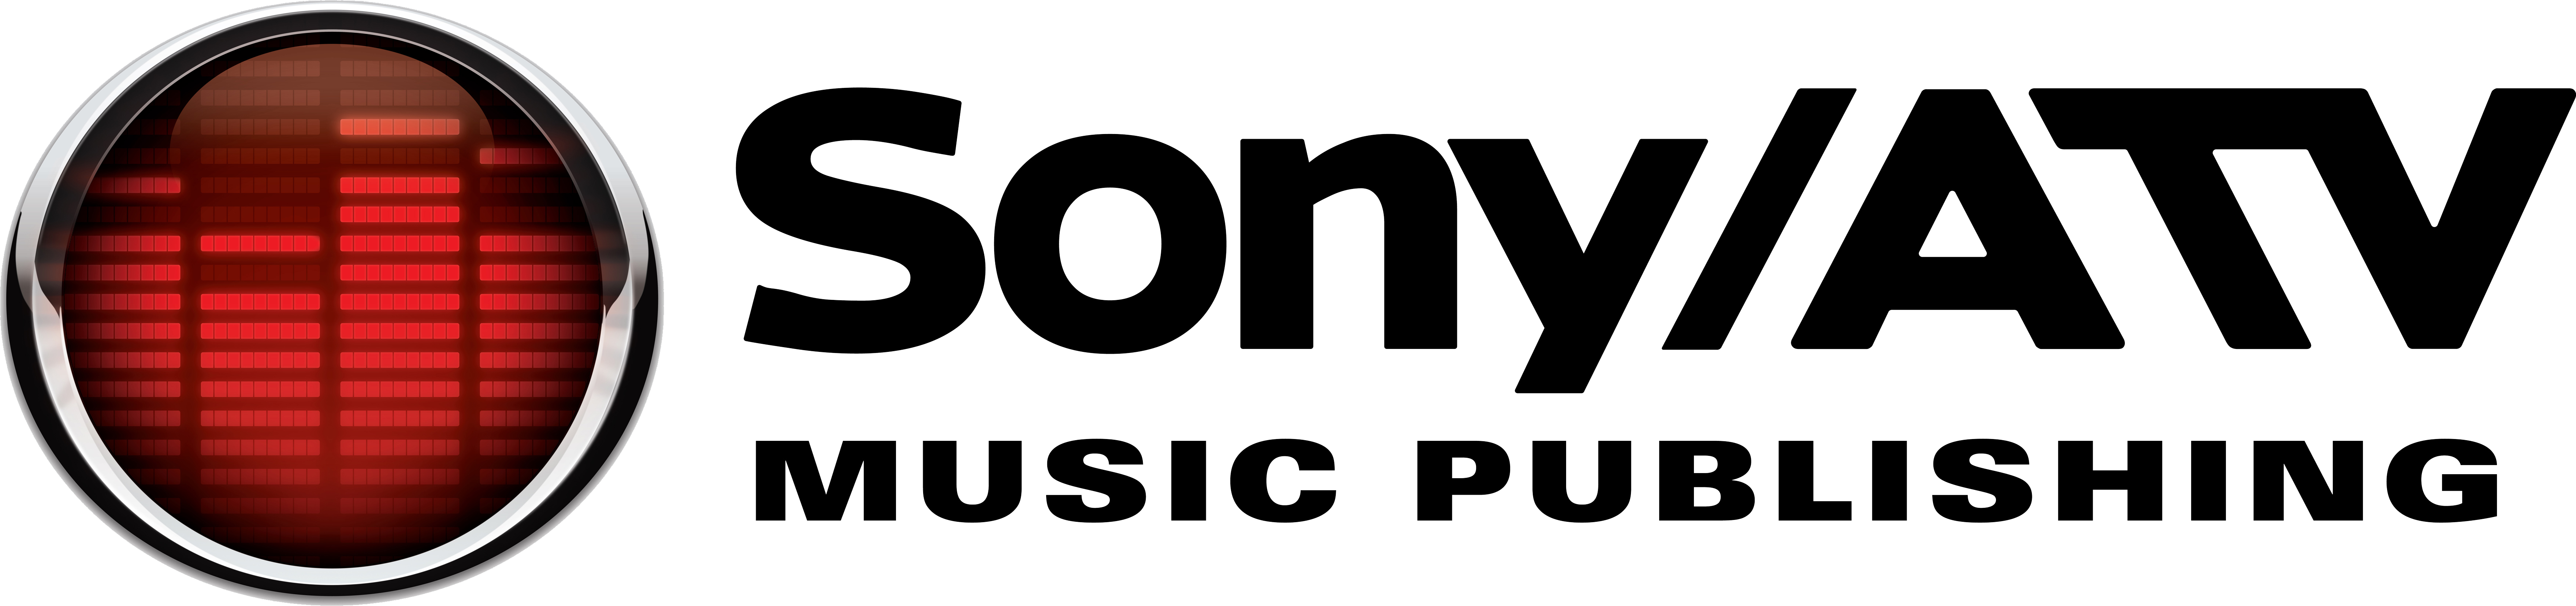 sony music logo transparent